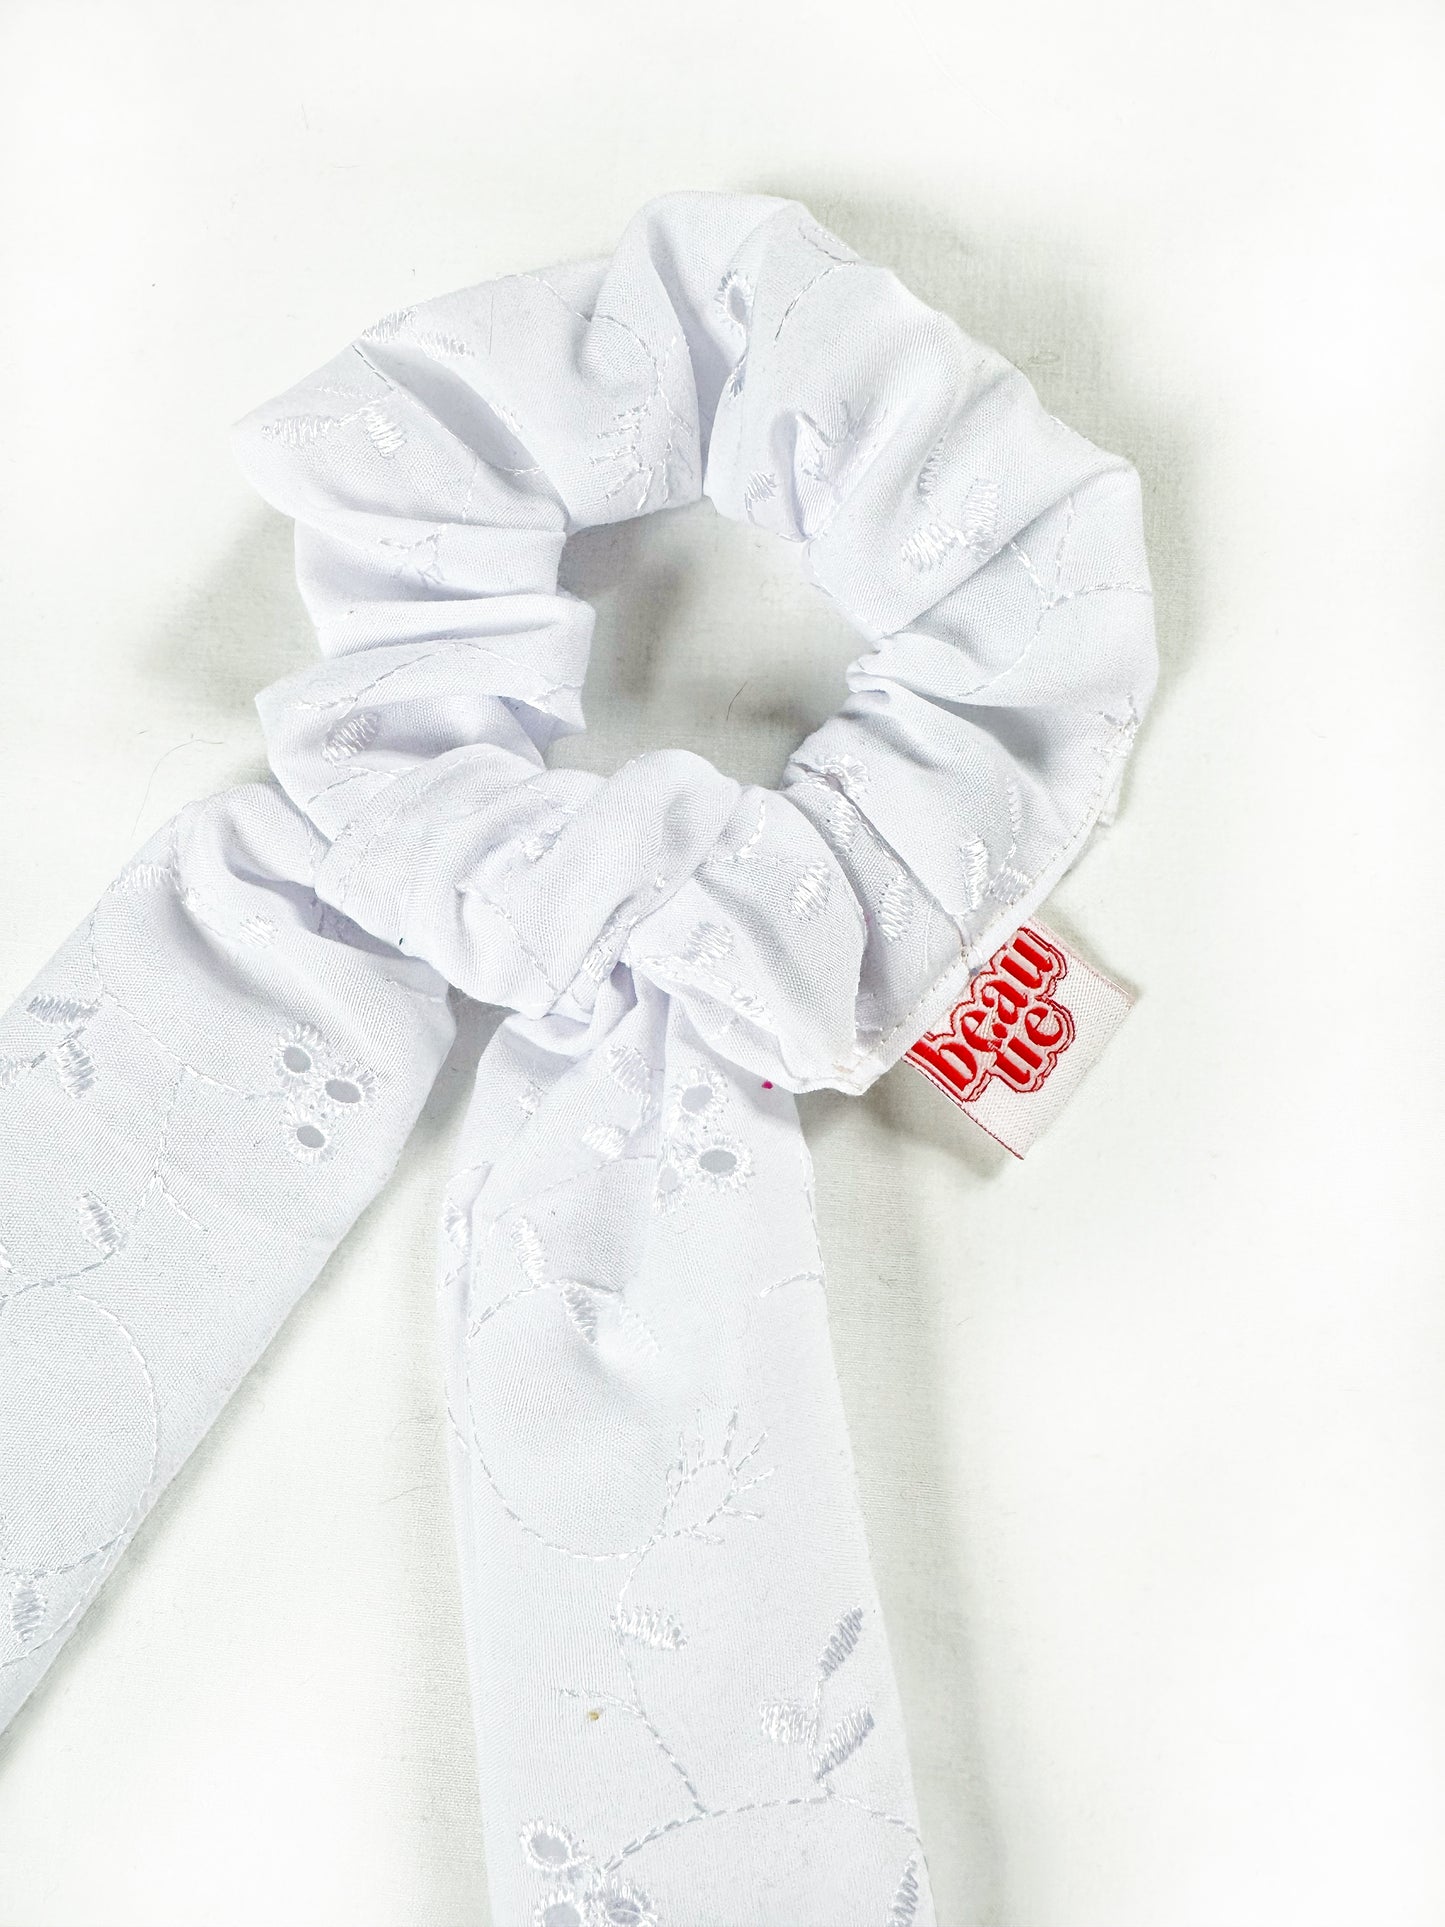 Dolly scarf scrunchie in white broderie, in mini or regular.